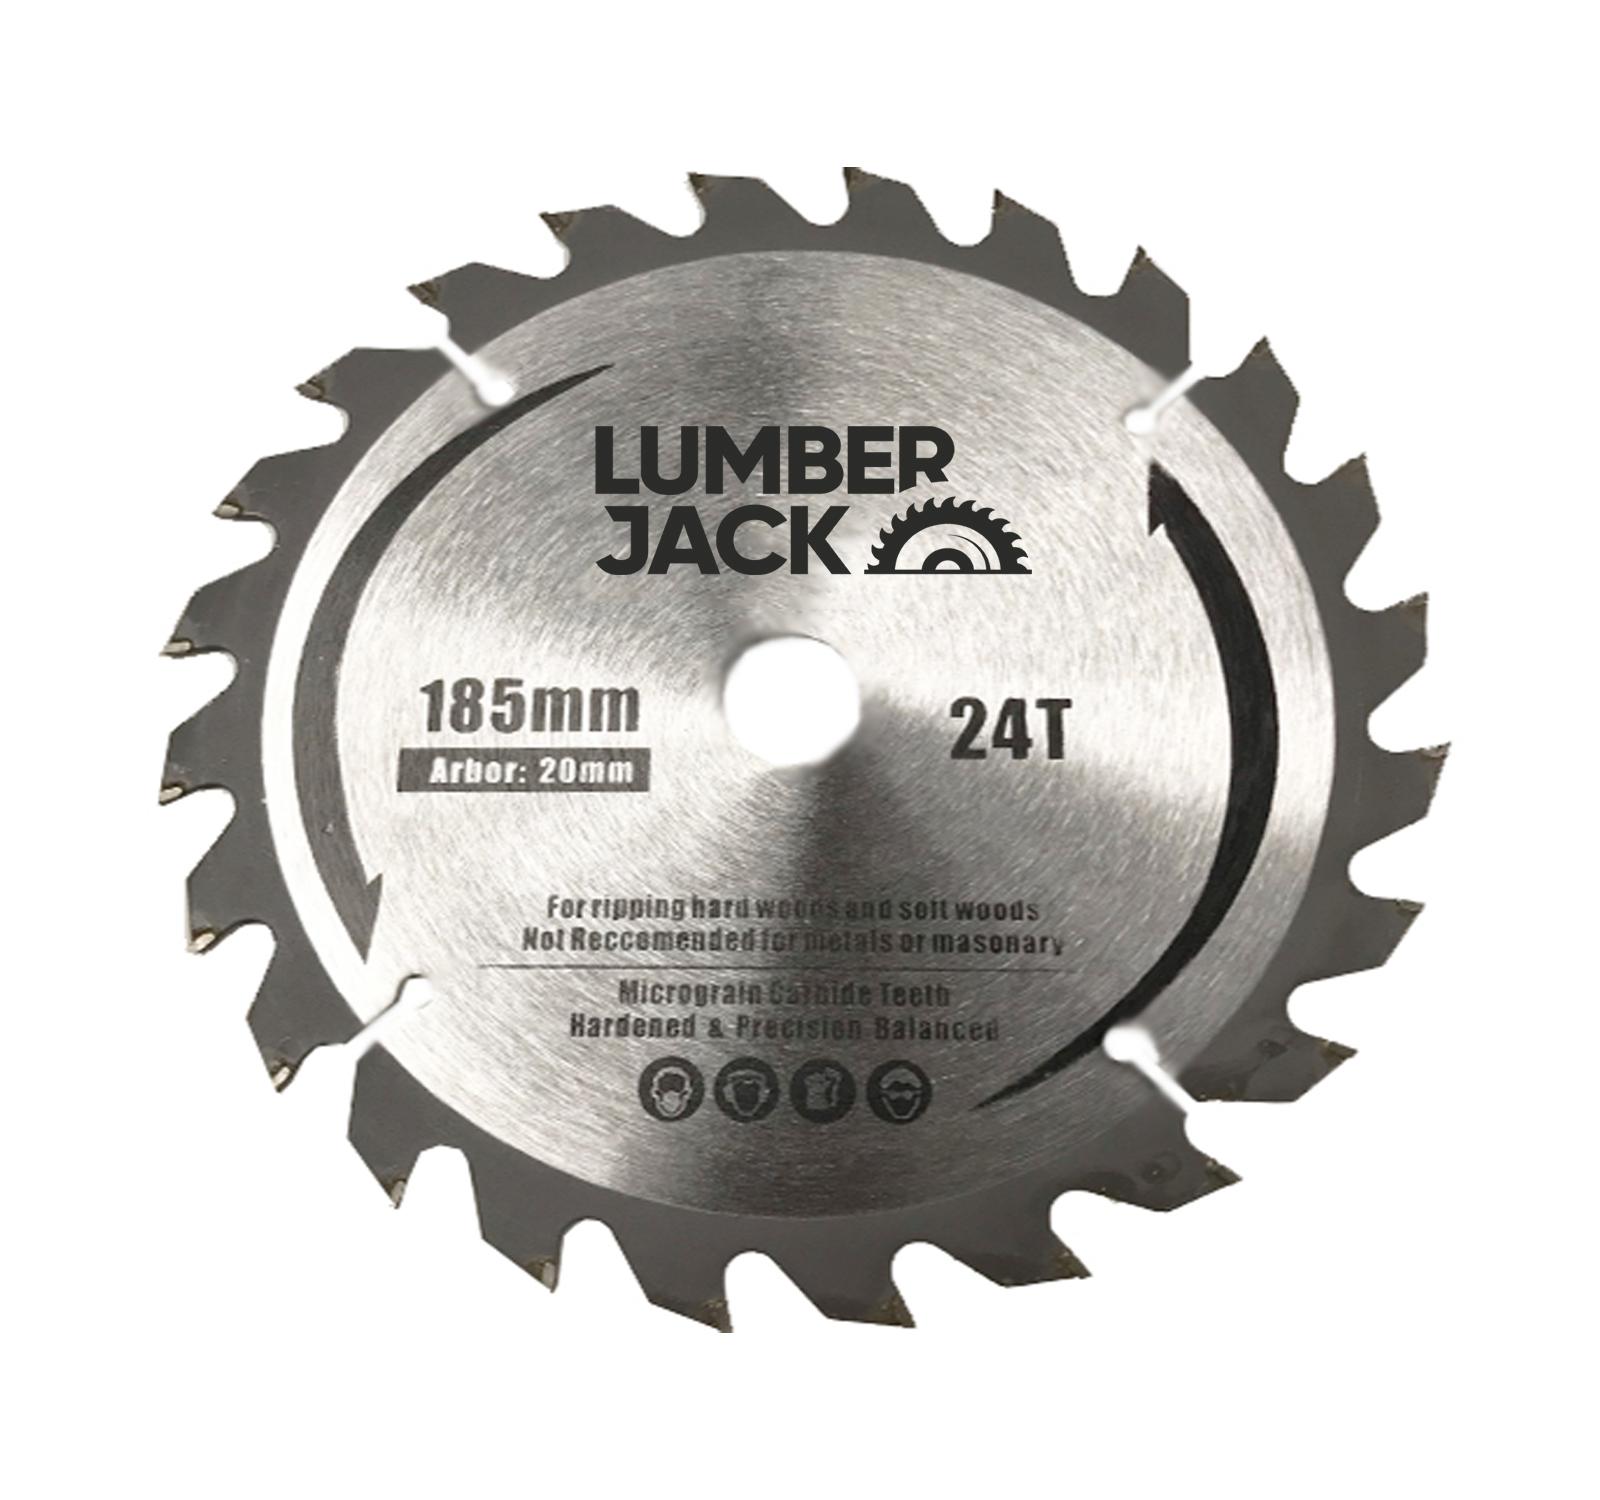 Lumberjack 10 Cast Iron Table Saw with Professional Wheel Kit 1800W